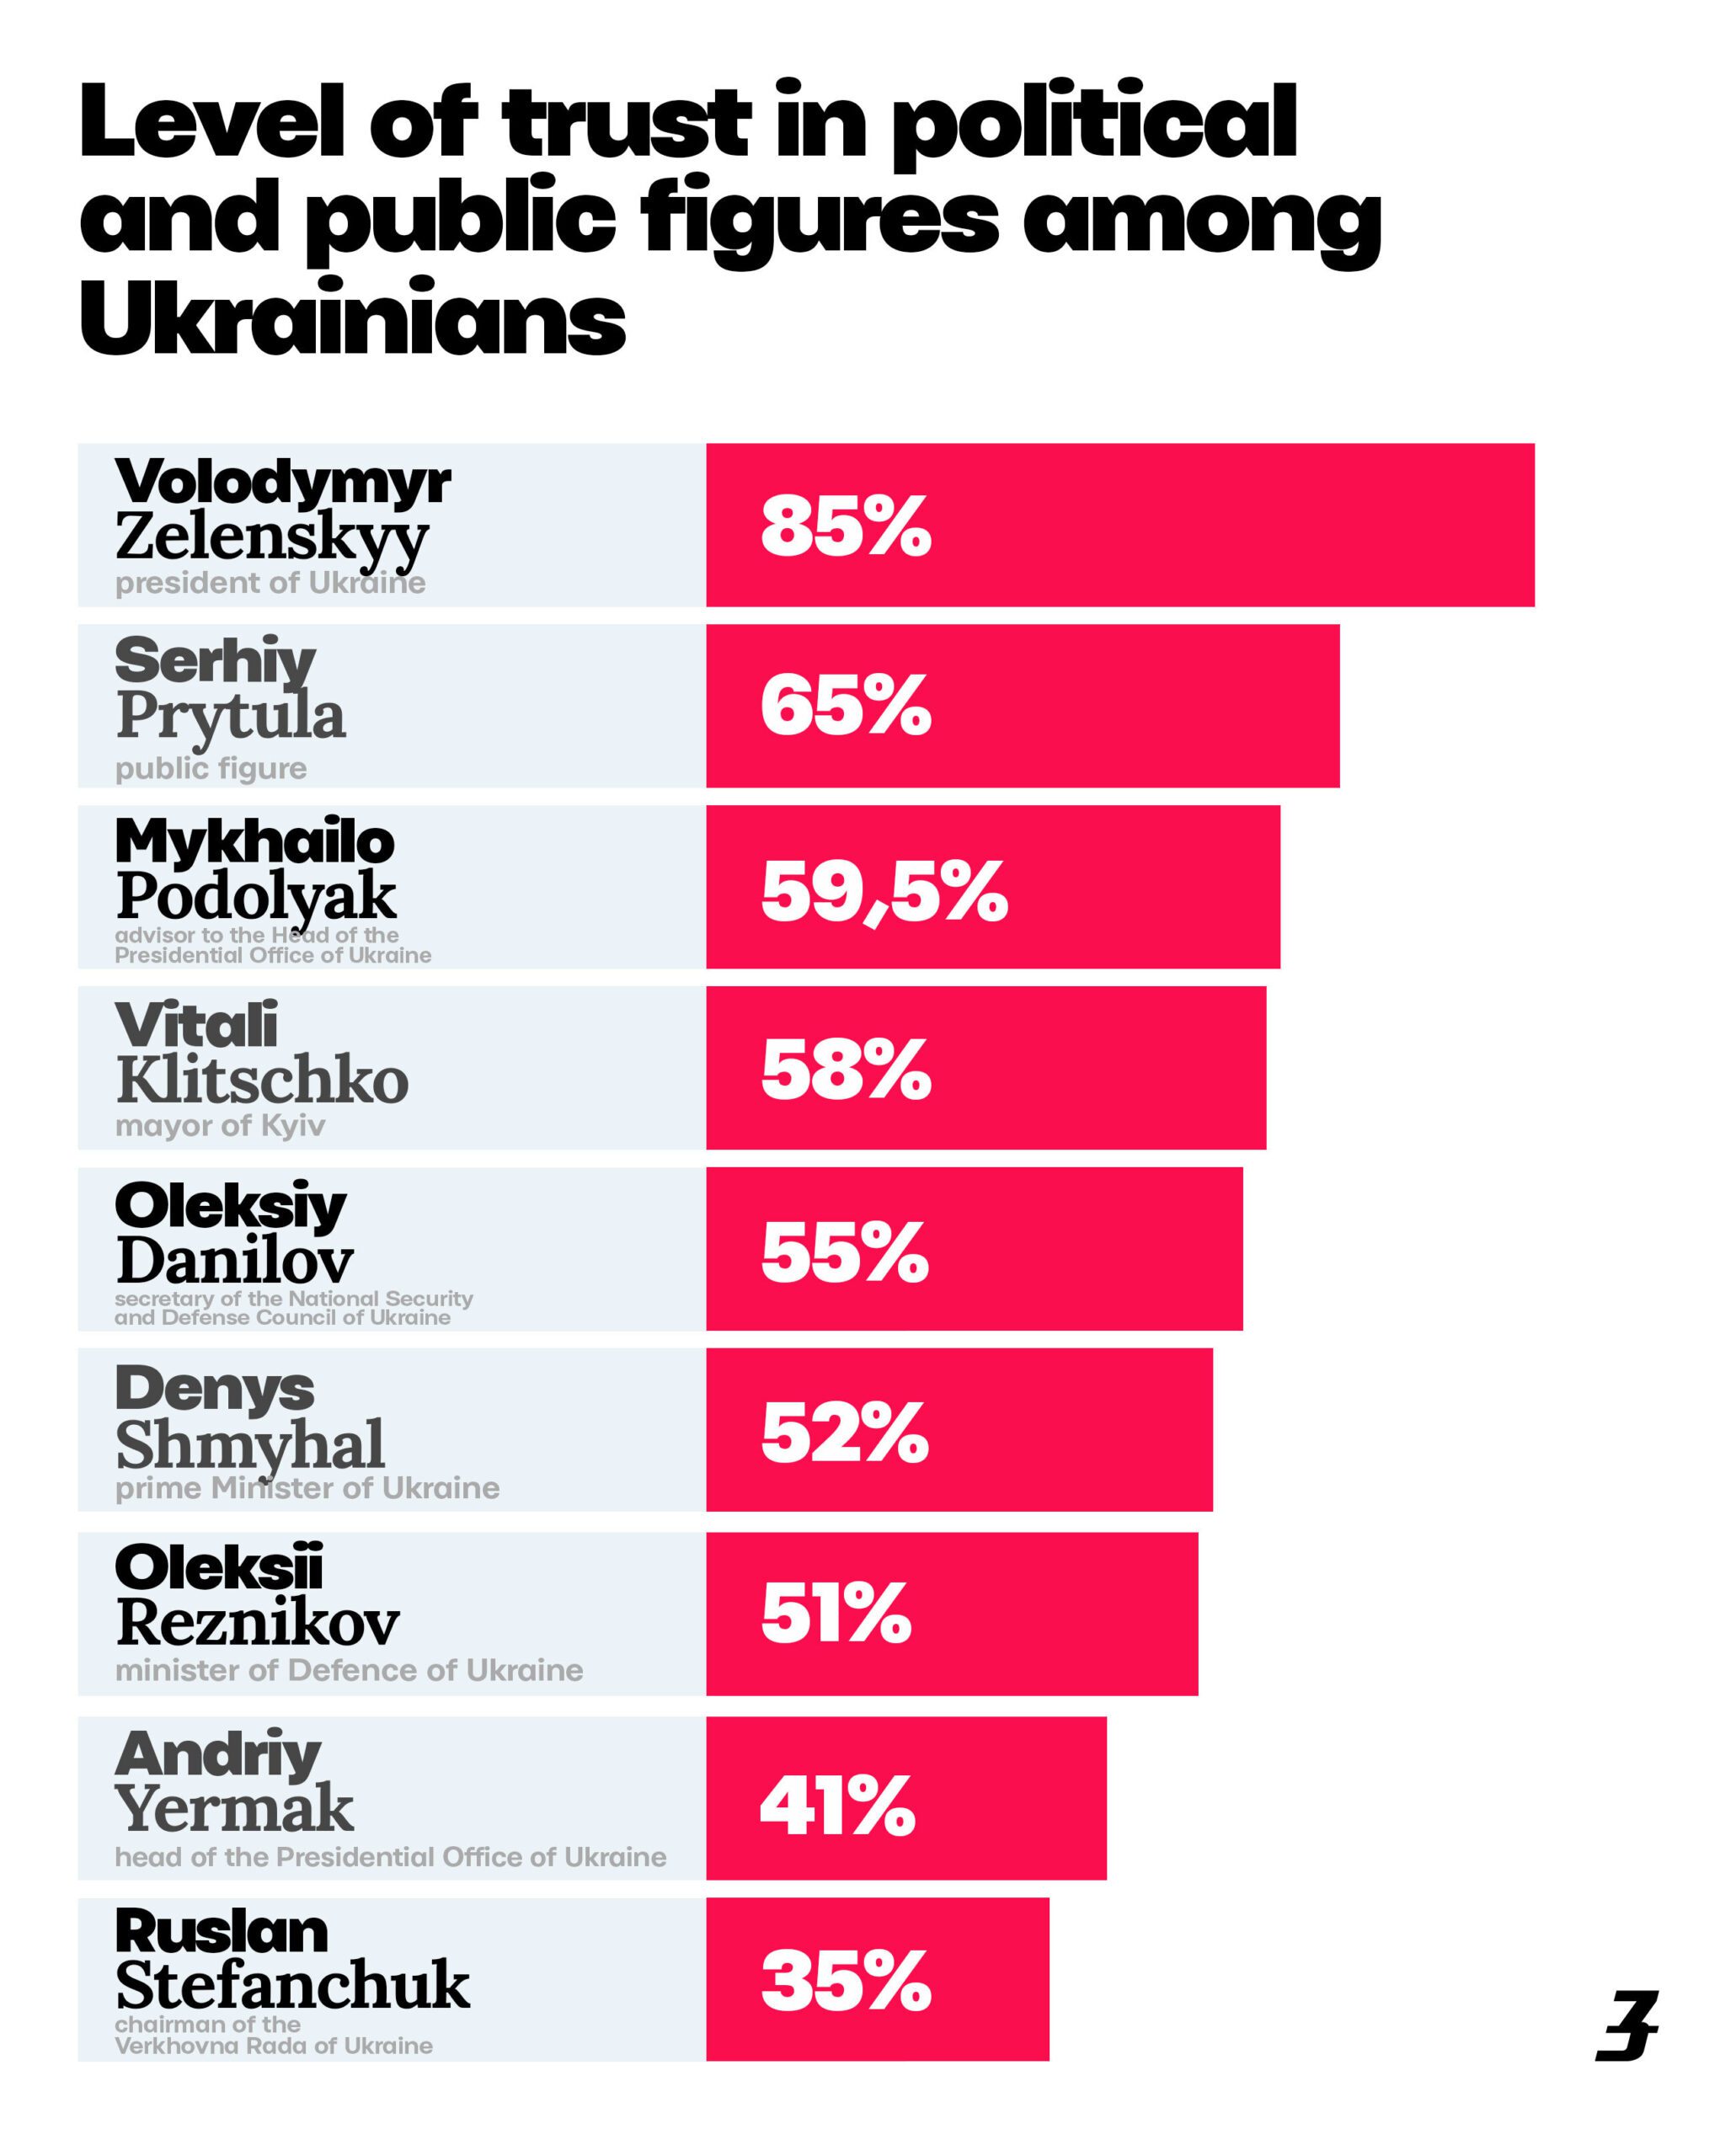 level of trust in polititians and public figures among Ukrainians